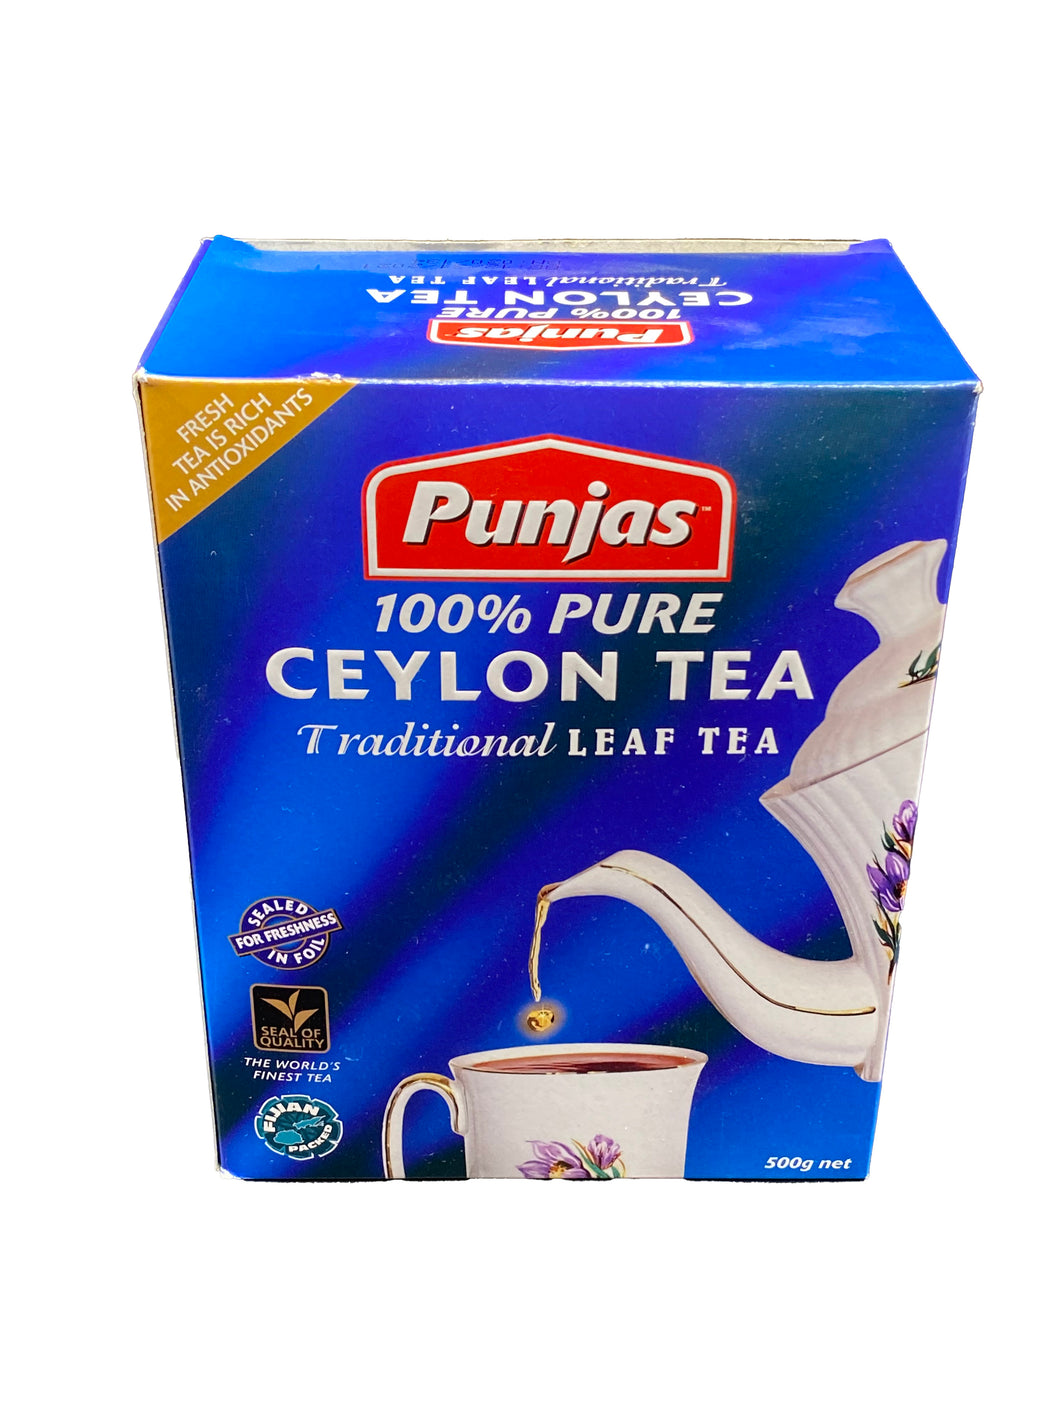 Punjas 100% Pure Ceylon Tea